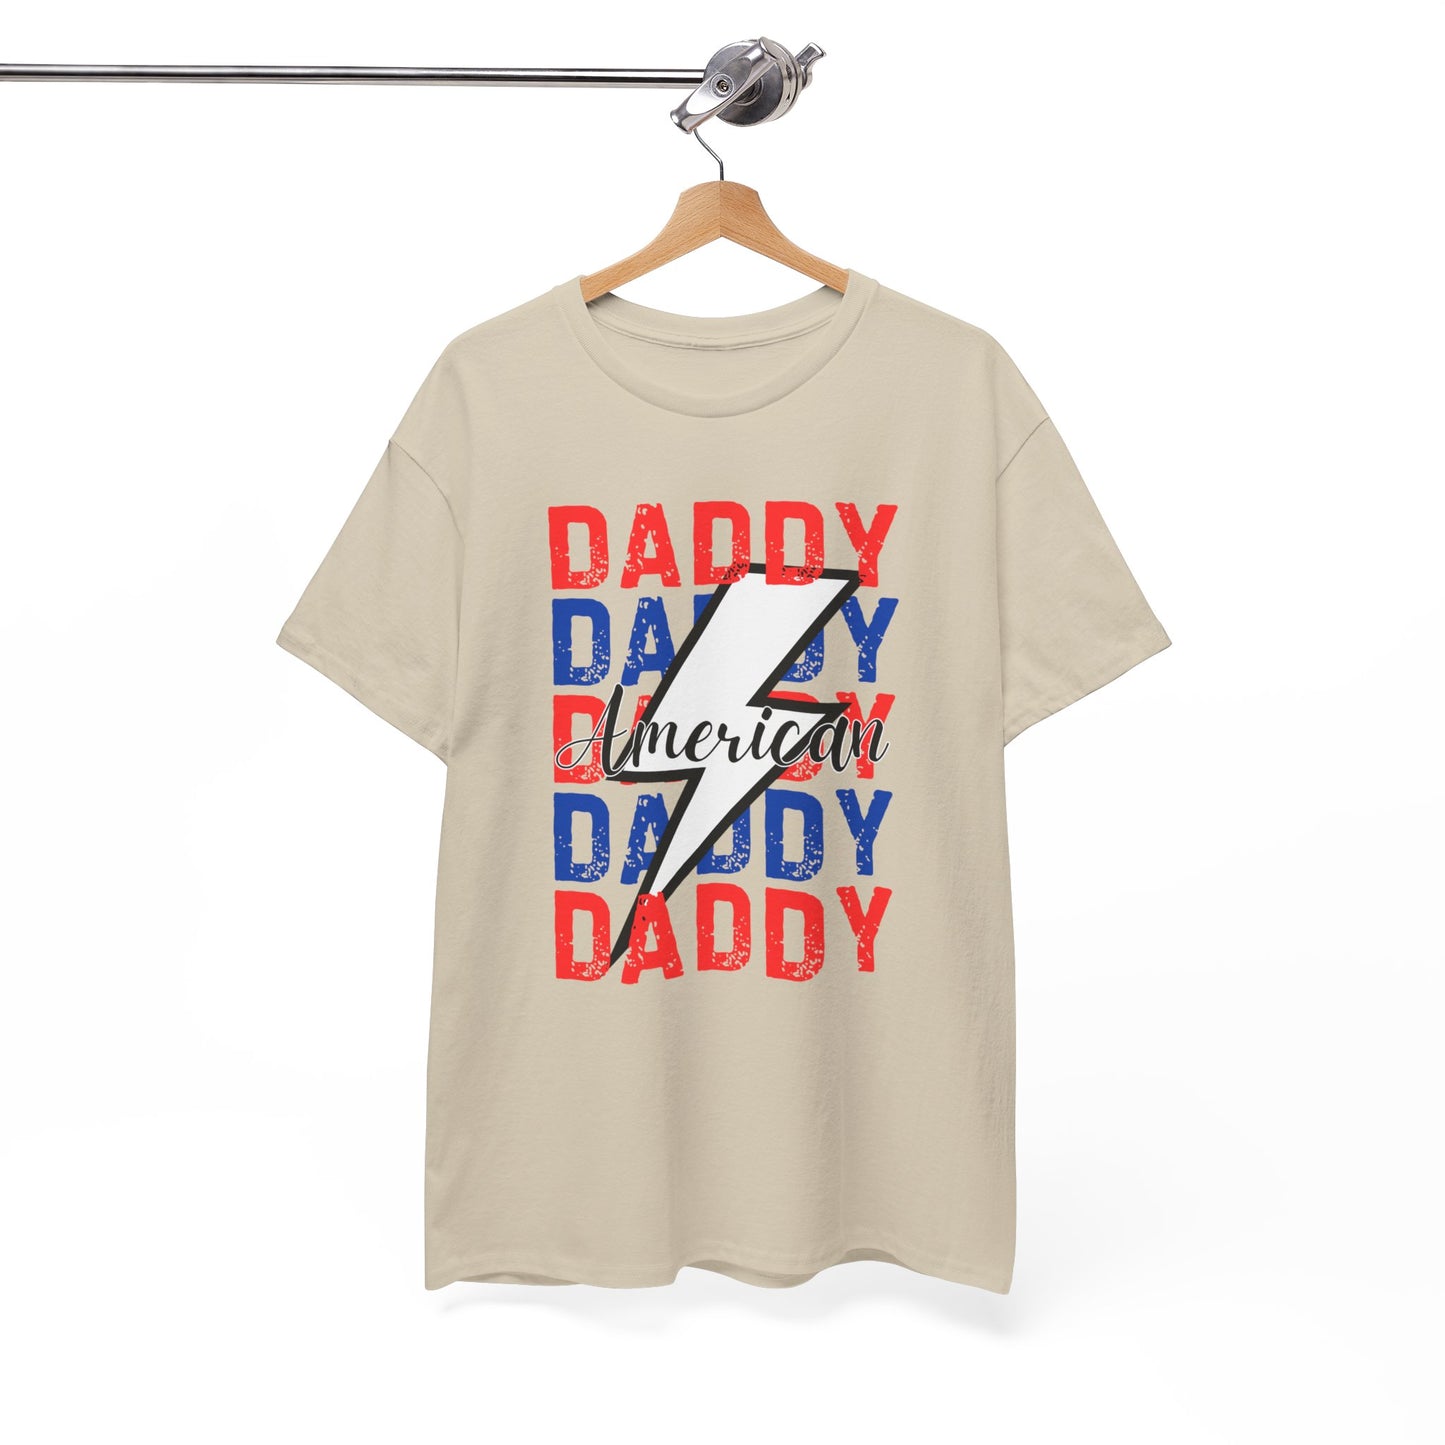 American Daddy Tee